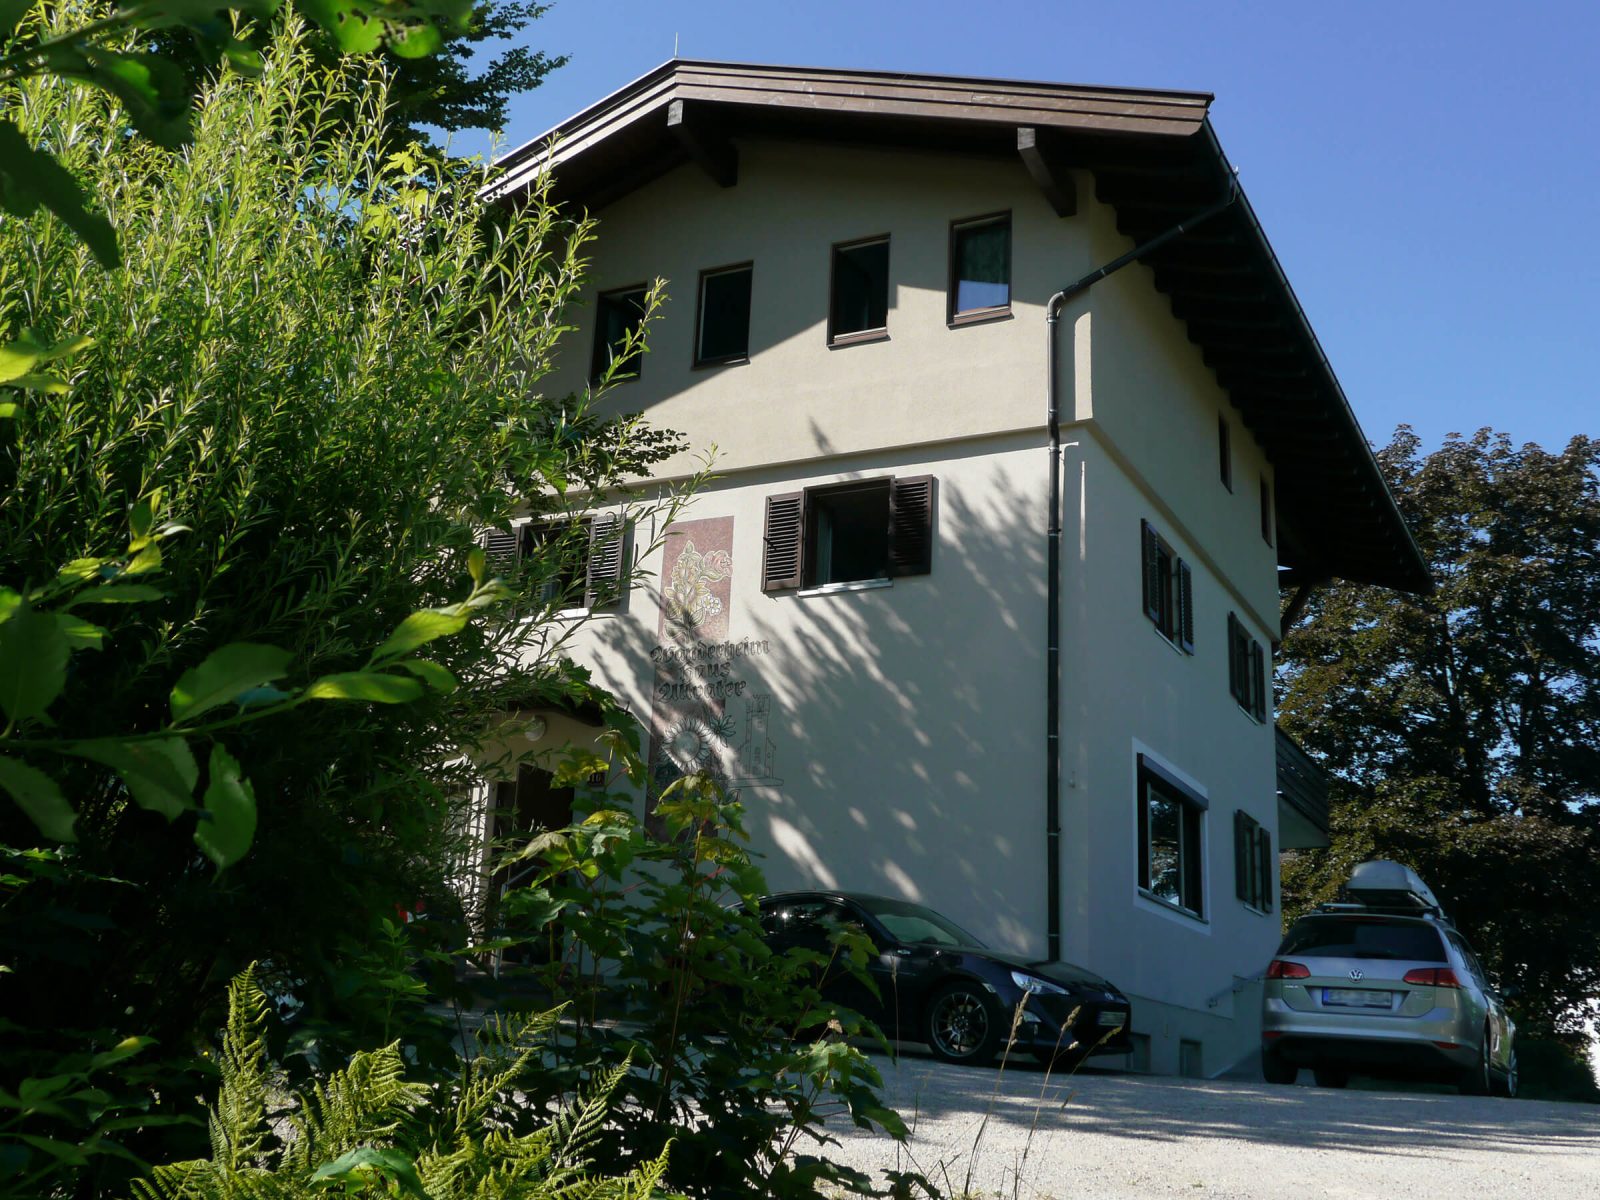 Wanderheim Haus Altvater